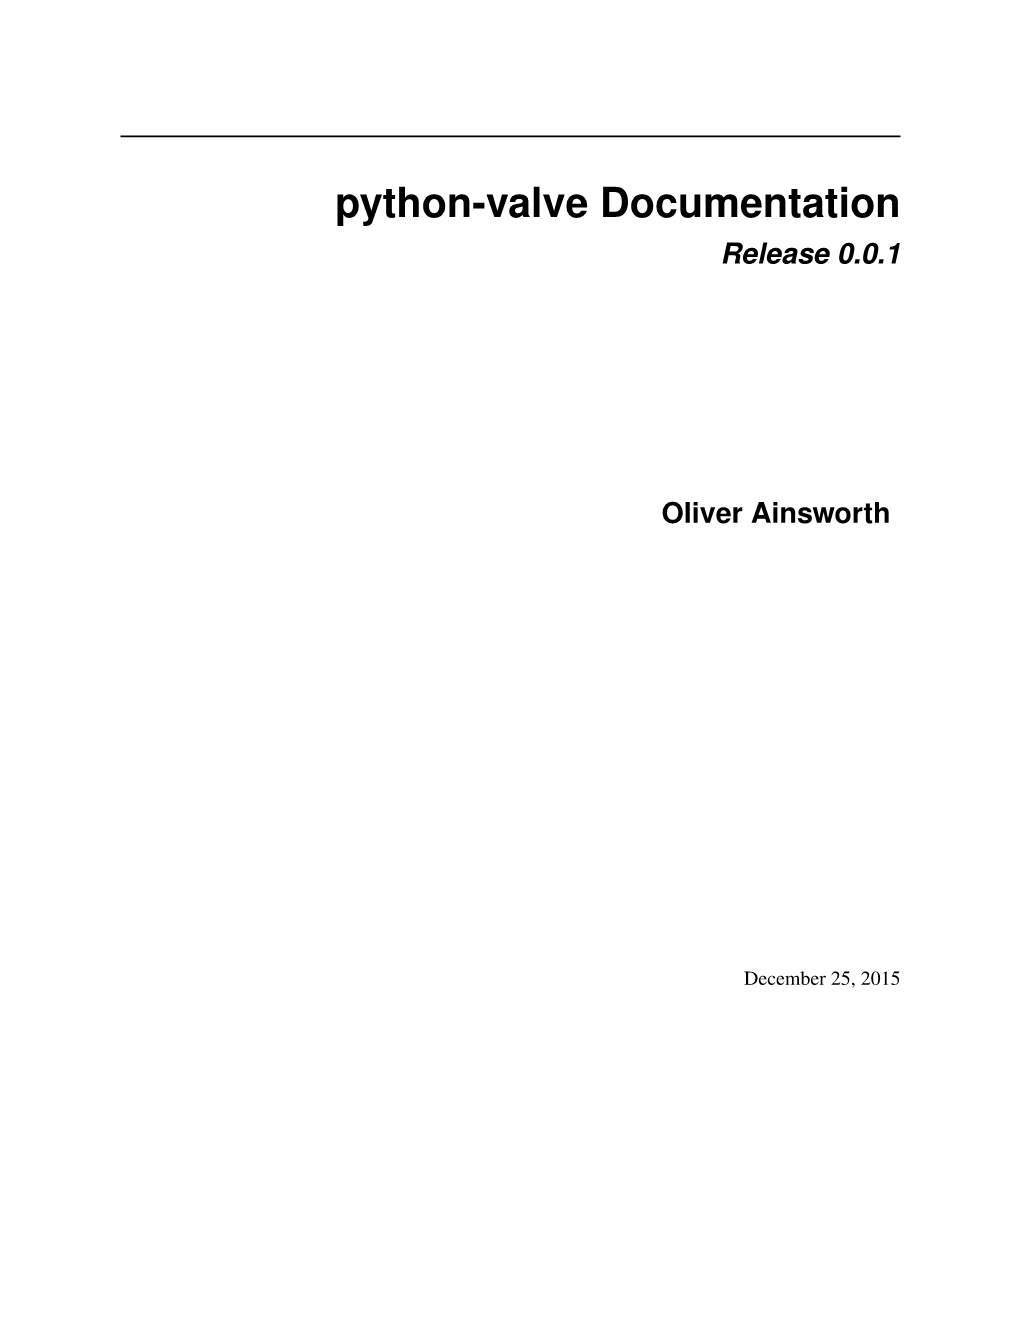 Python-Valve Documentation Release 0.0.1